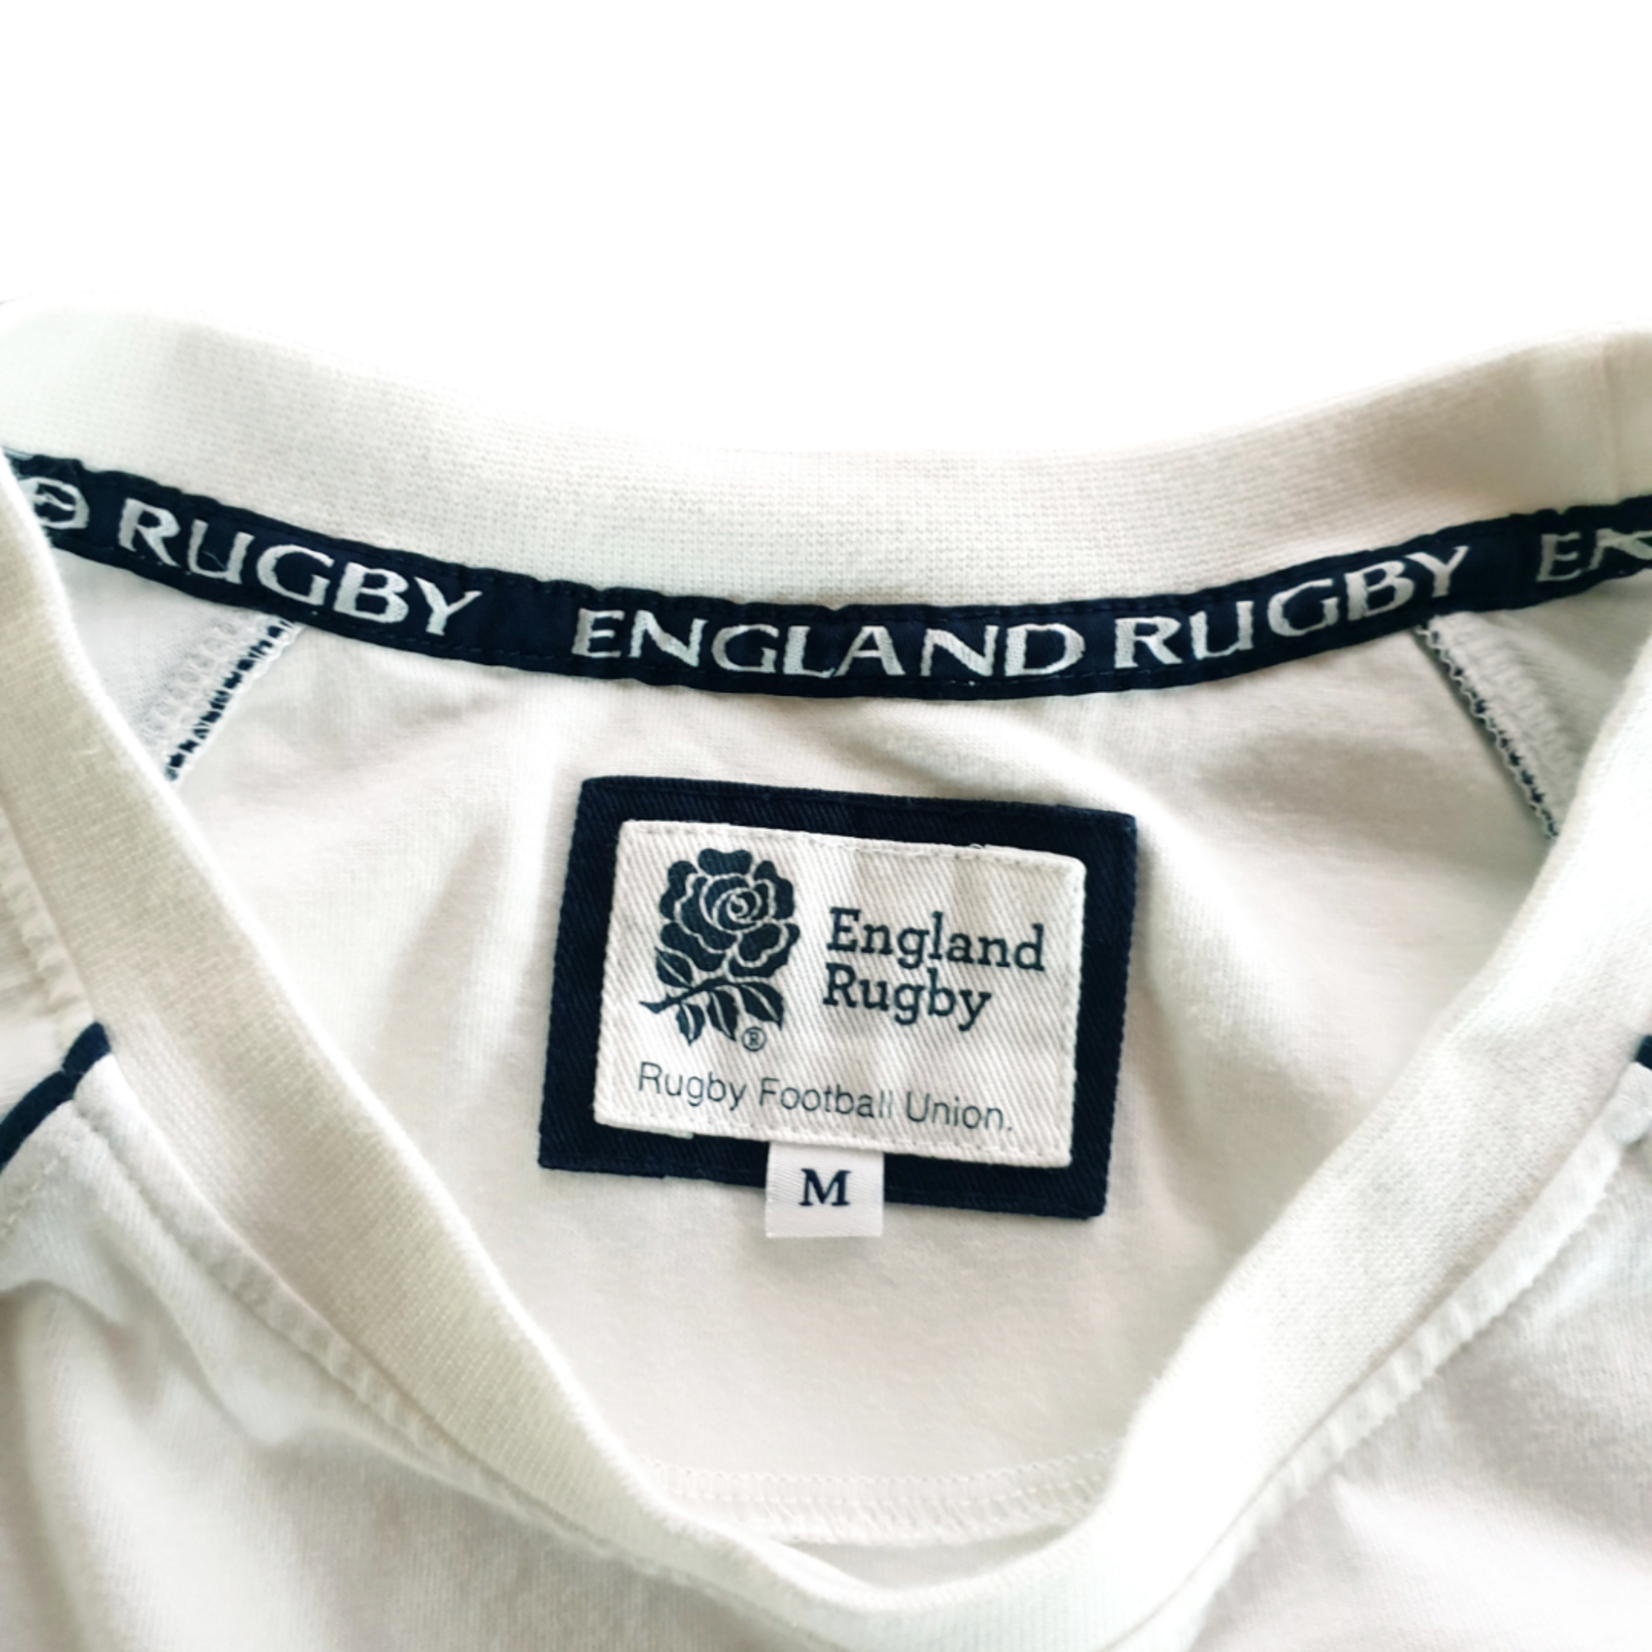 England Rugby Origineel England Rugby vintage rugby shirt Engeland